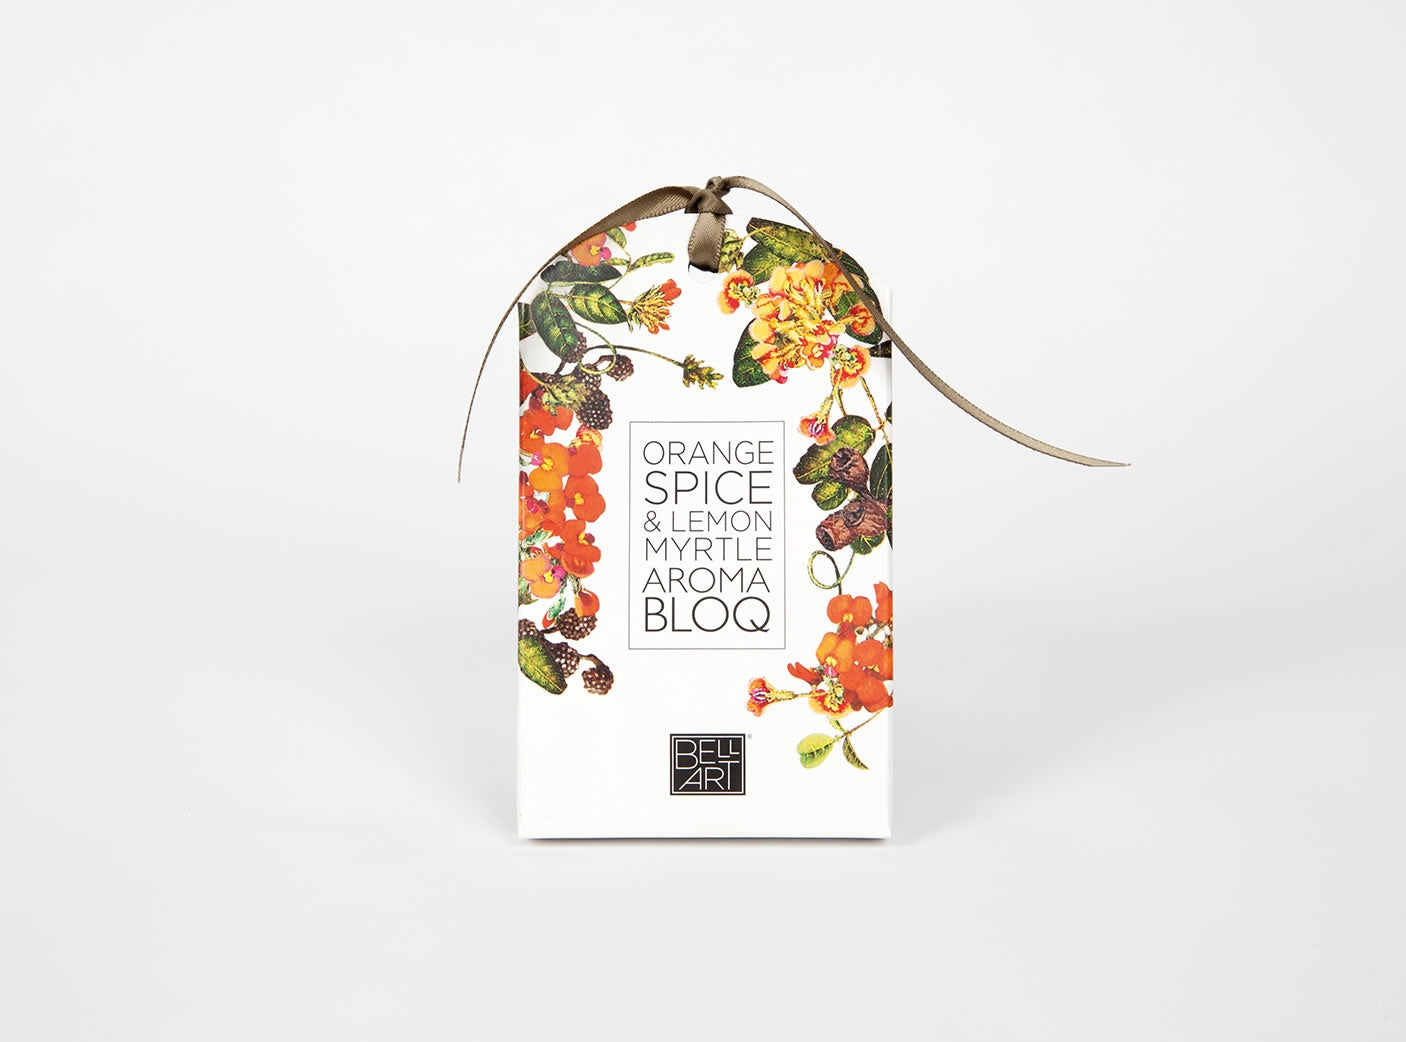 Aroma Bloq | Orange Spice